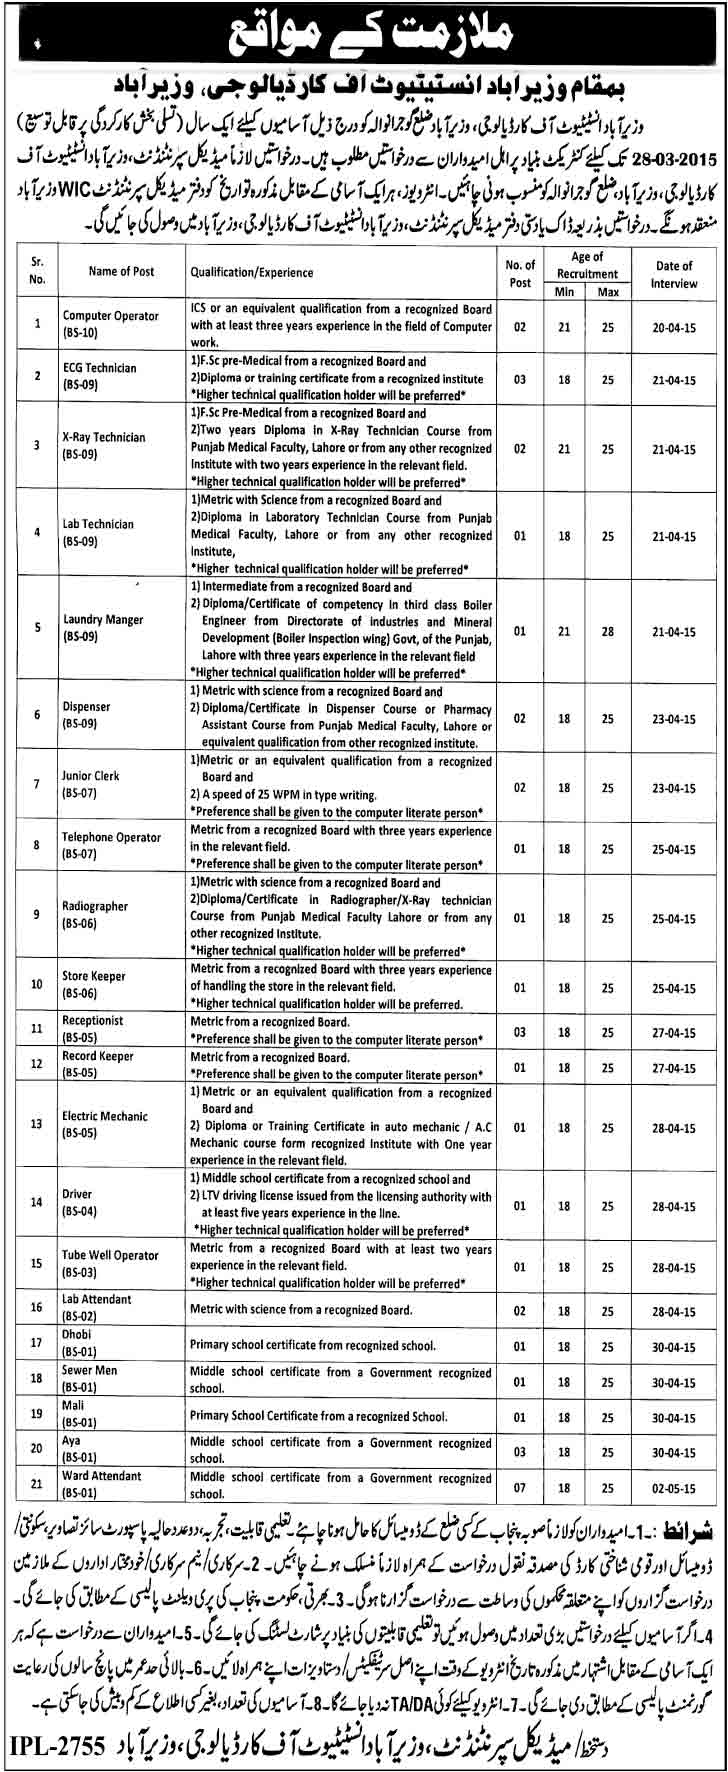 Wazirabad-Institute-Jobs